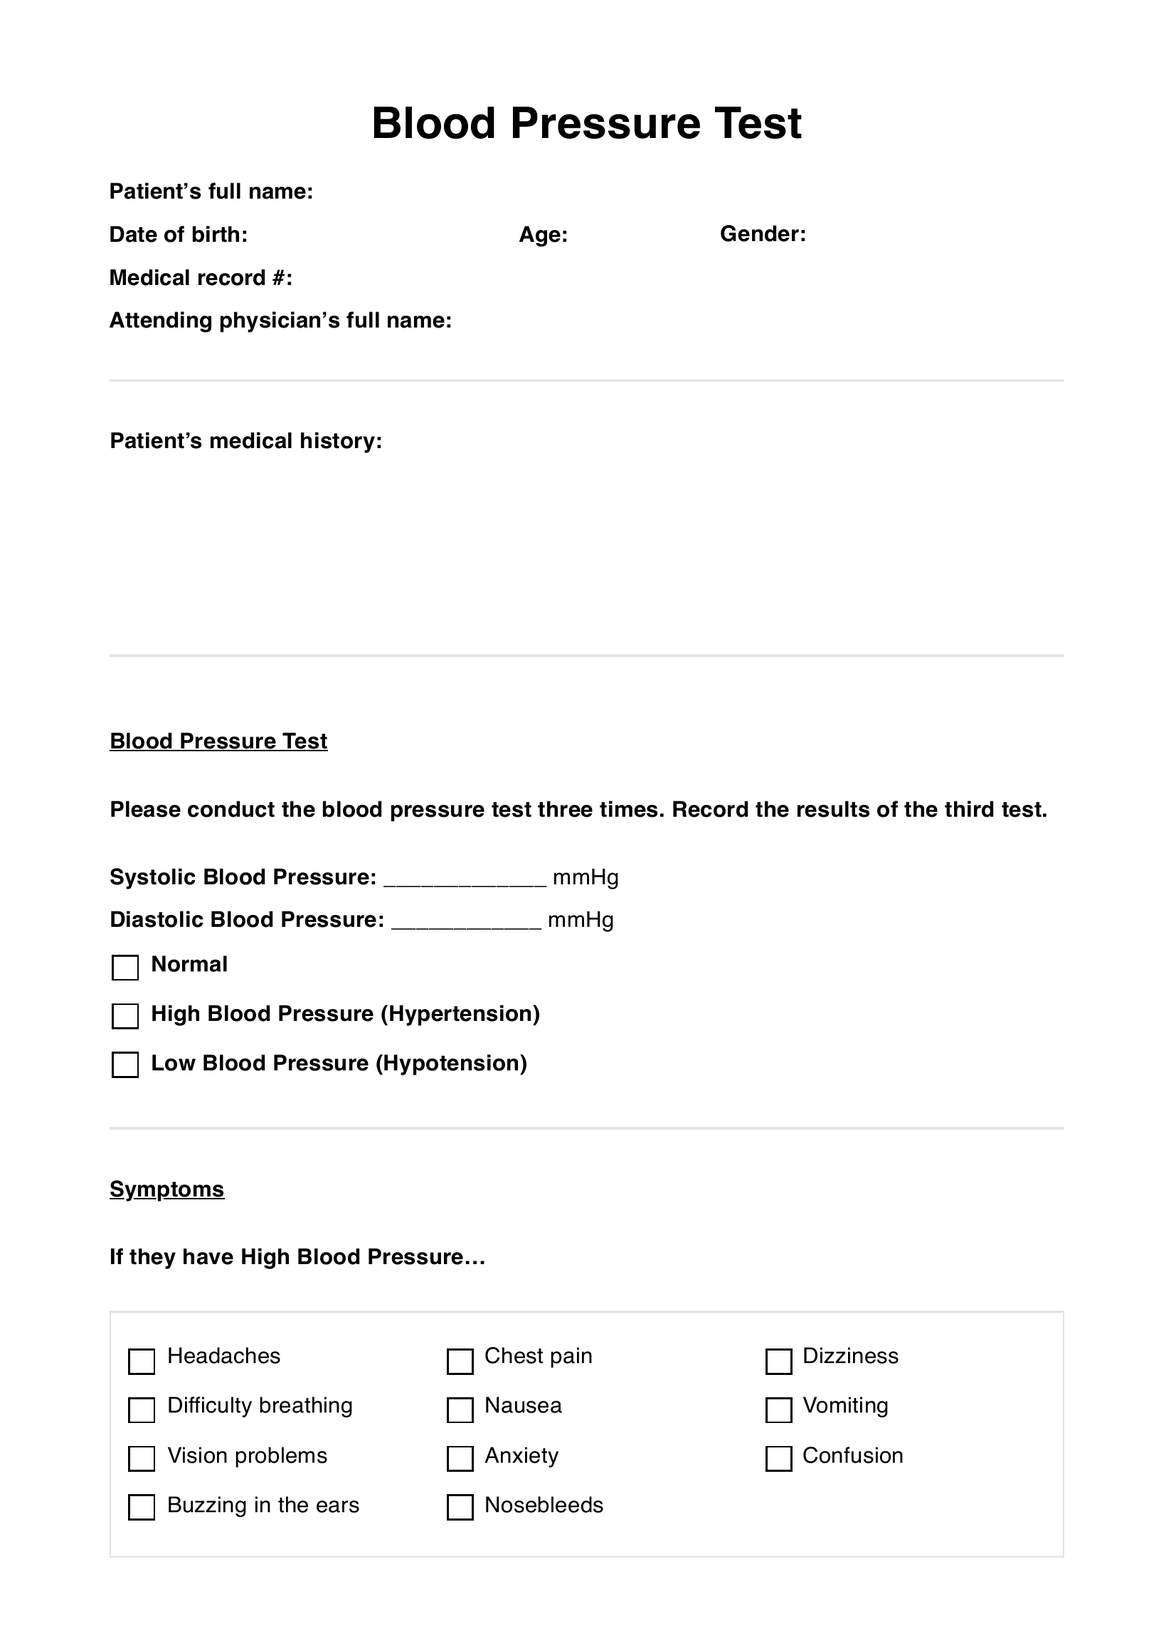 Blood Pressure Test PDF Example